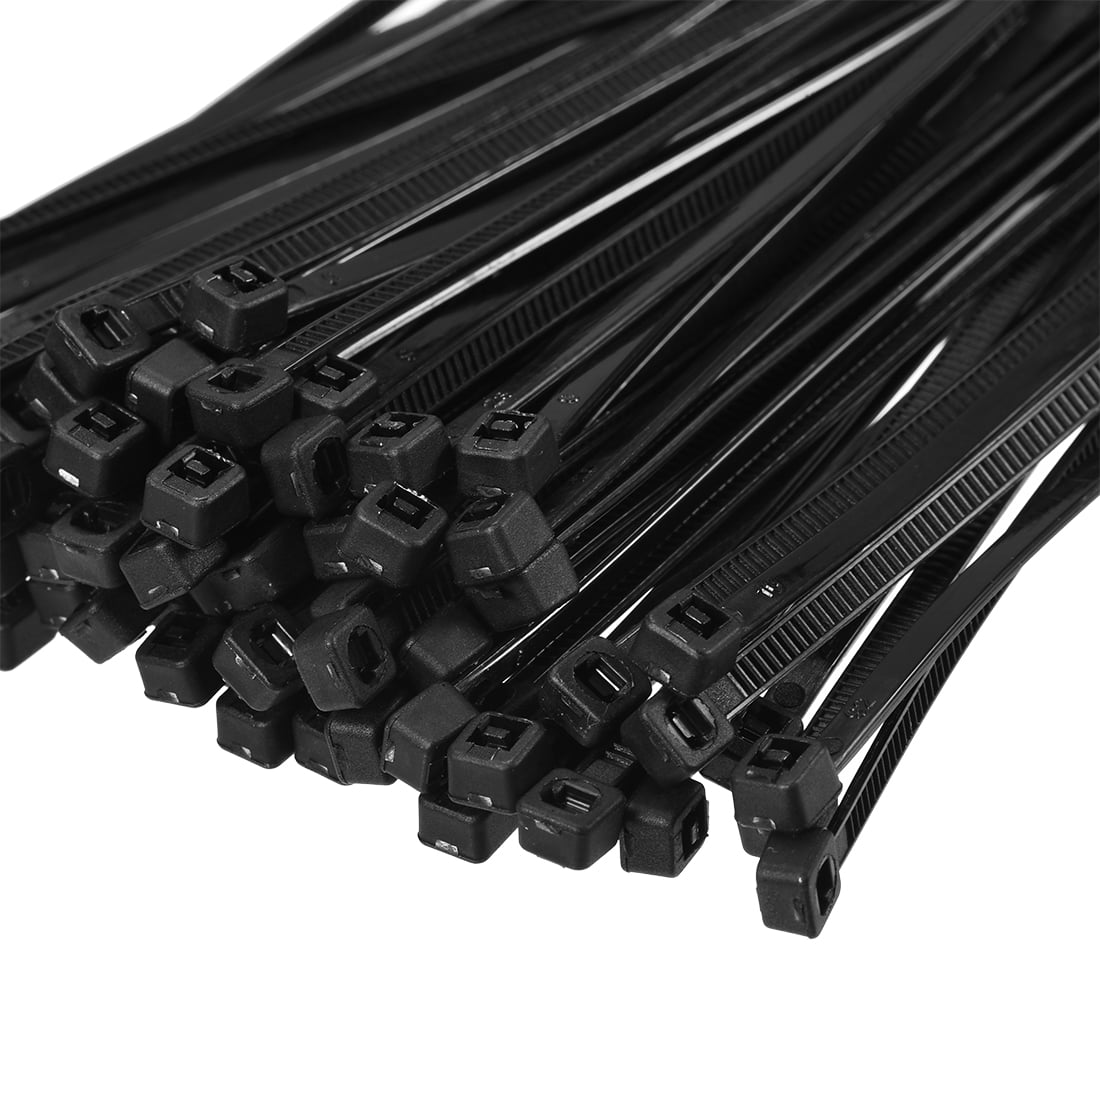 Cable Zip Ties 100mmx1.8mm Self-Locking Nylon Tie Wraps Black 300pcs